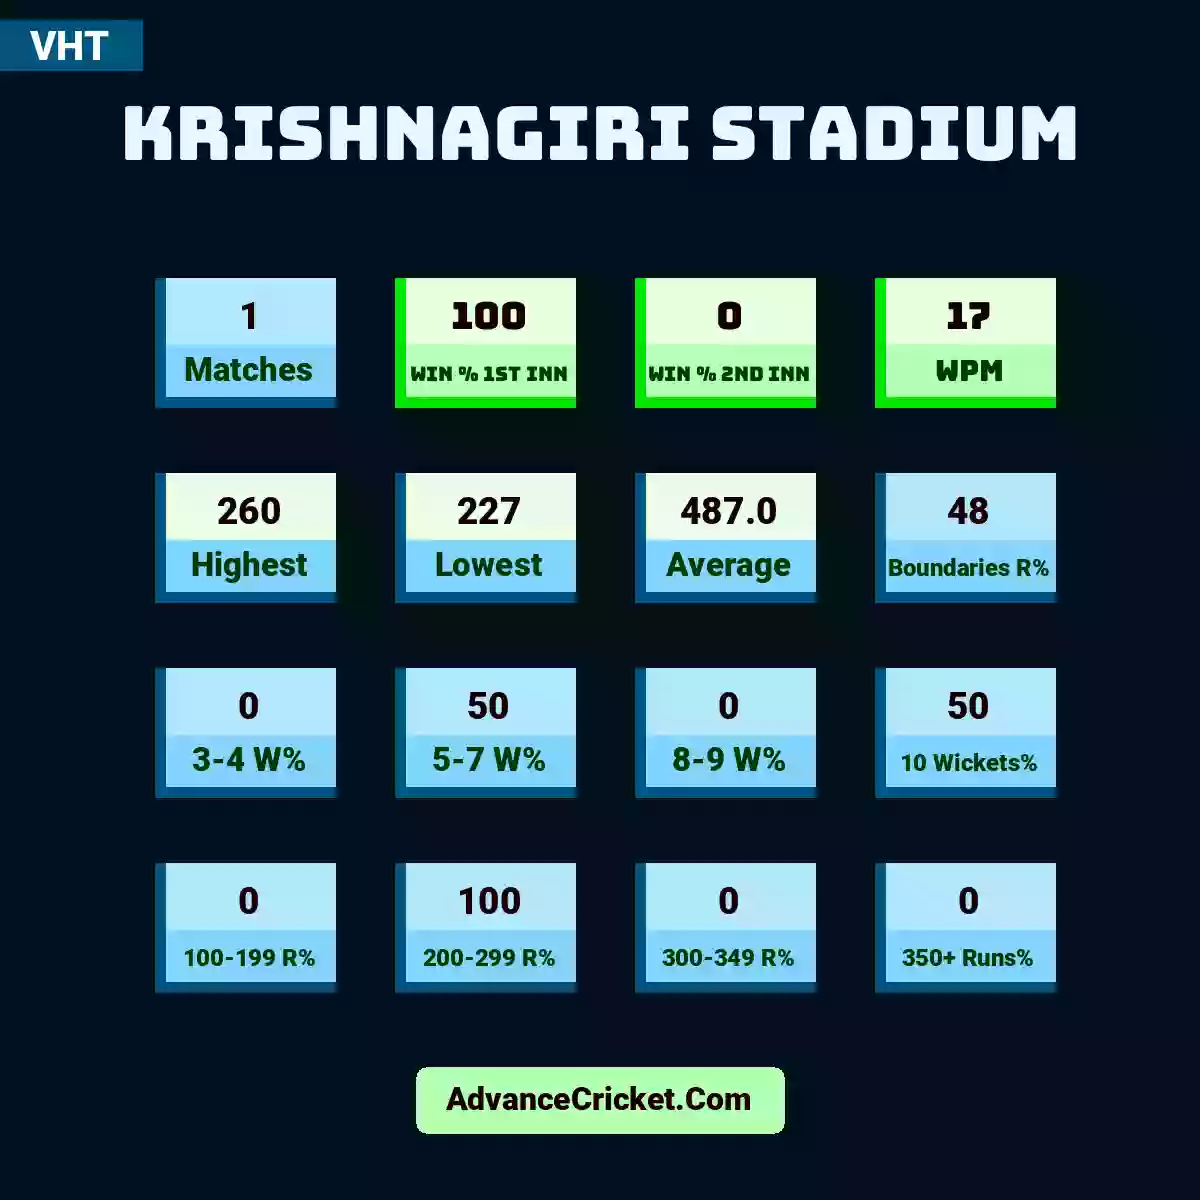 Image showing Krishnagiri Stadium with Matches: 1, Win % 1st Inn: 100, Win % 2nd Inn: 0, WPM: 17, Highest: 260, Lowest: 227, Average: 487.0, Boundaries R%: 48, 3-4 W%: 0, 5-7 W%: 50, 8-9 W%: 0, 10 Wickets%: 50, 100-199 R%: 0, 200-299 R%: 100, 300-349 R%: 0, 350+ Runs%: 0.